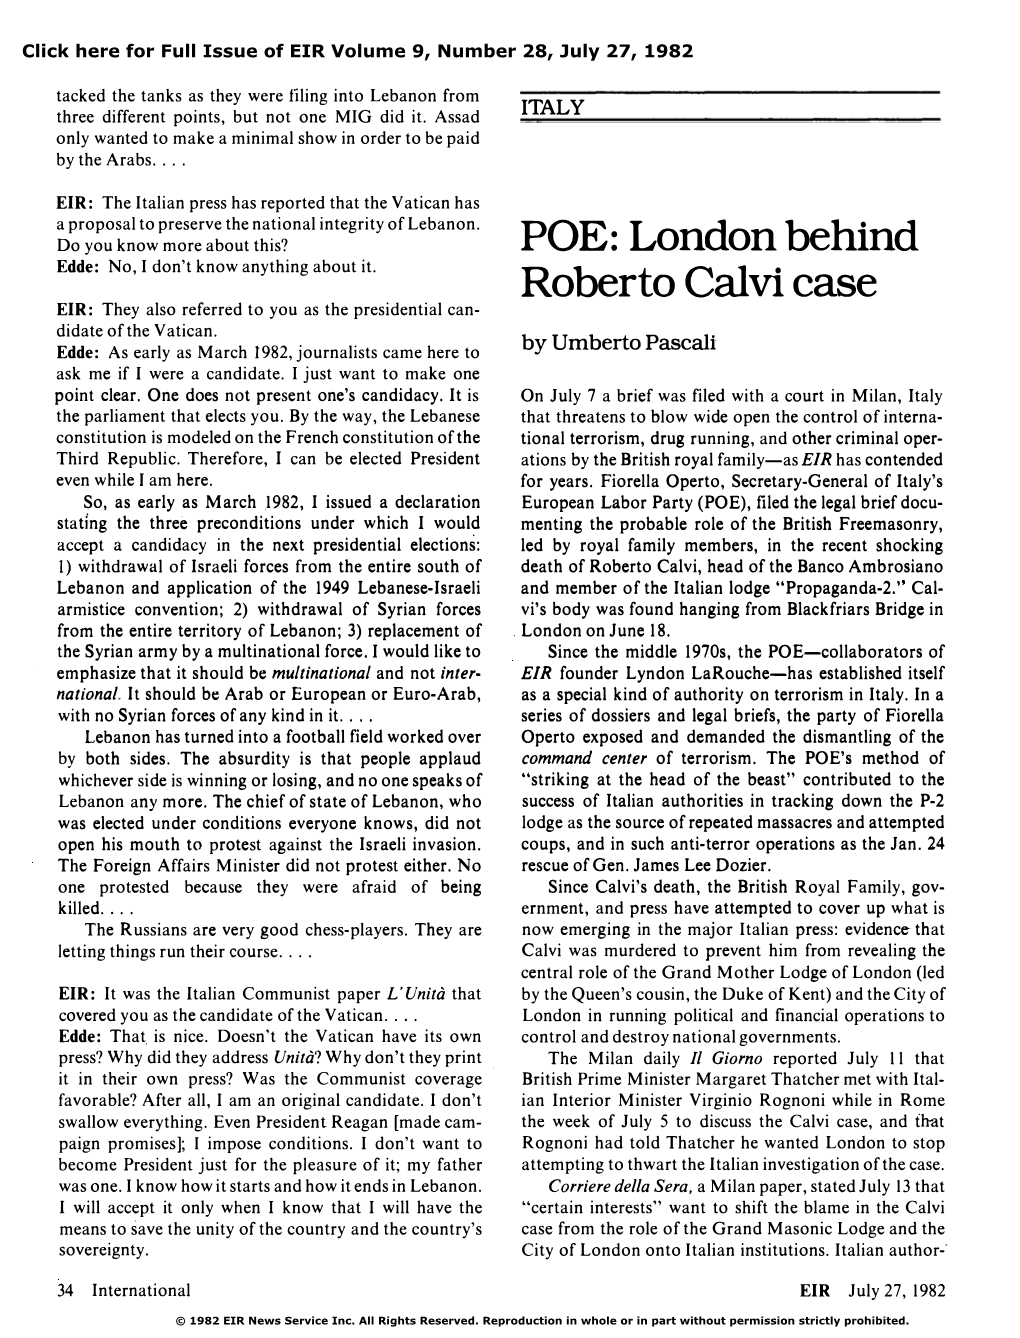 POE: London Behind the Roberto Calvi Case